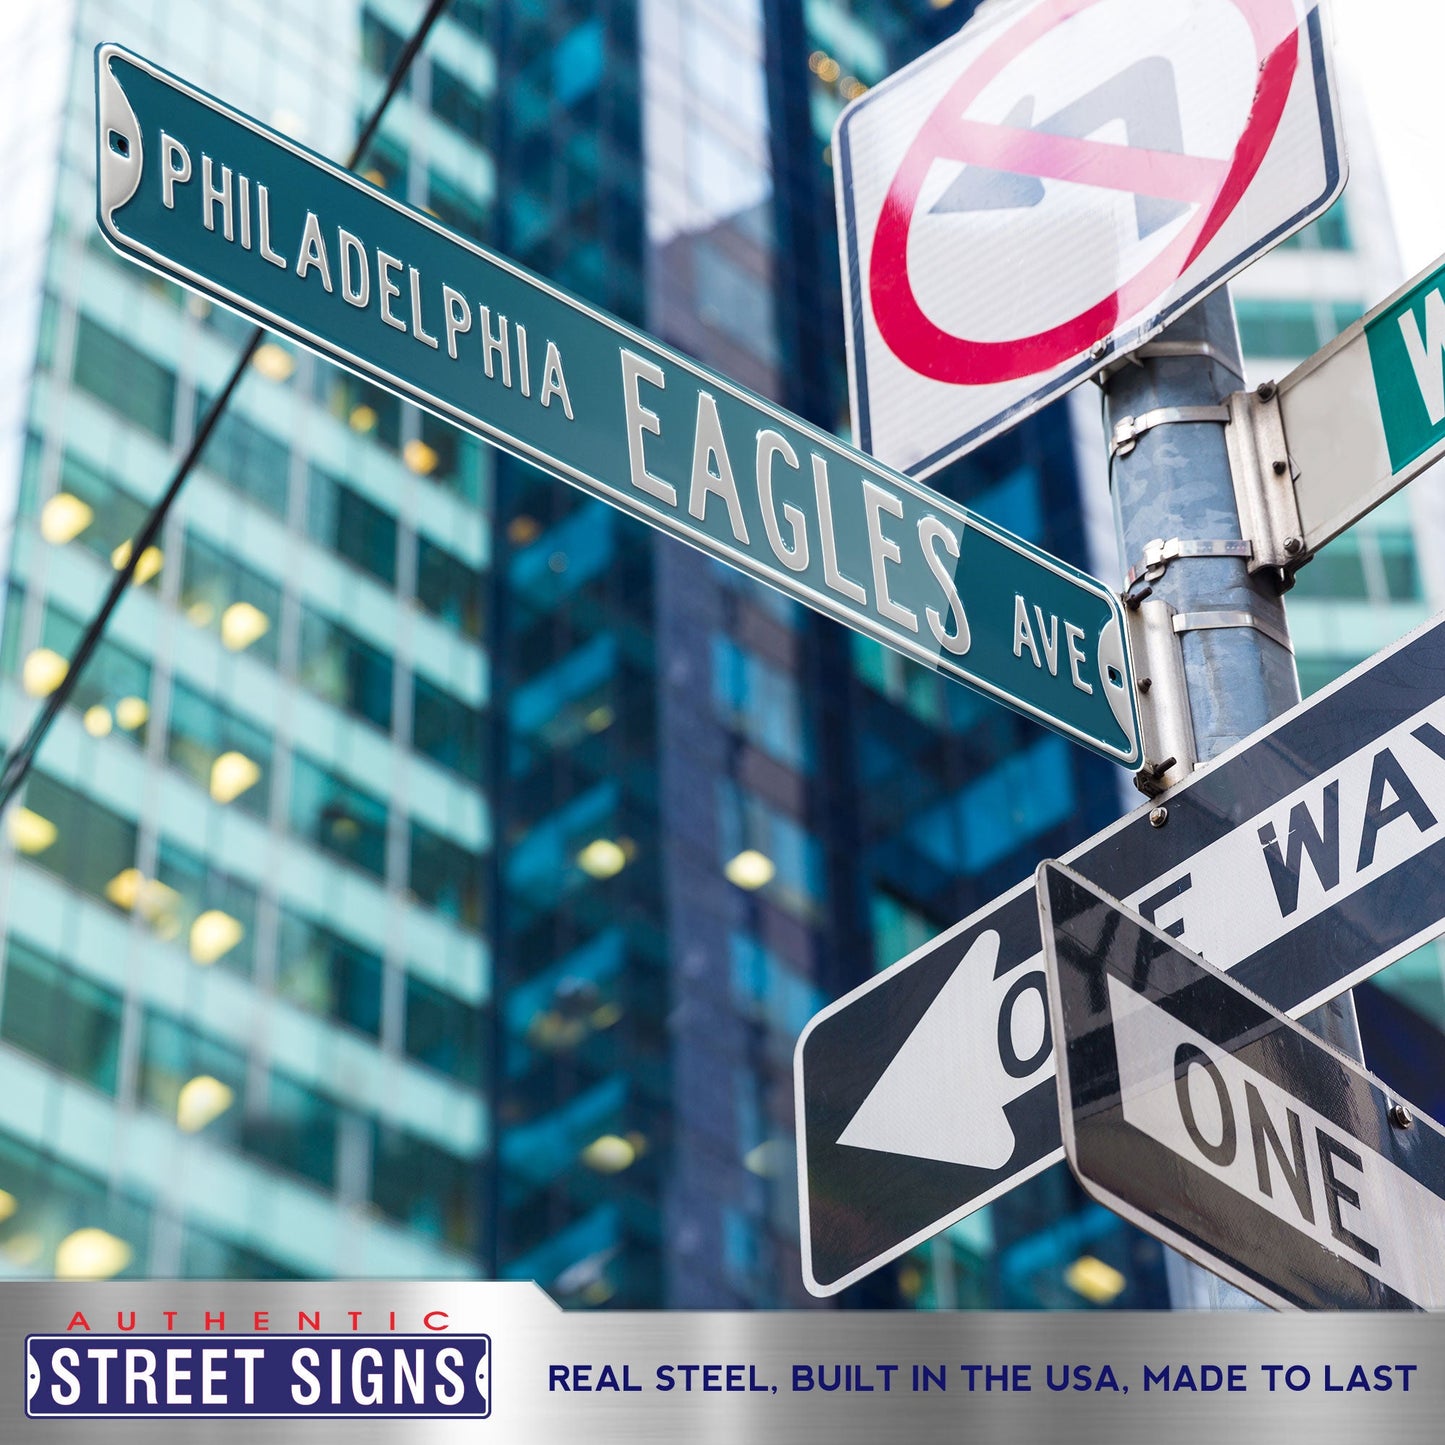 Philadelphia Eagles - PHILADELPHIA EAGLES AVE - Embossed Steel Street Sign